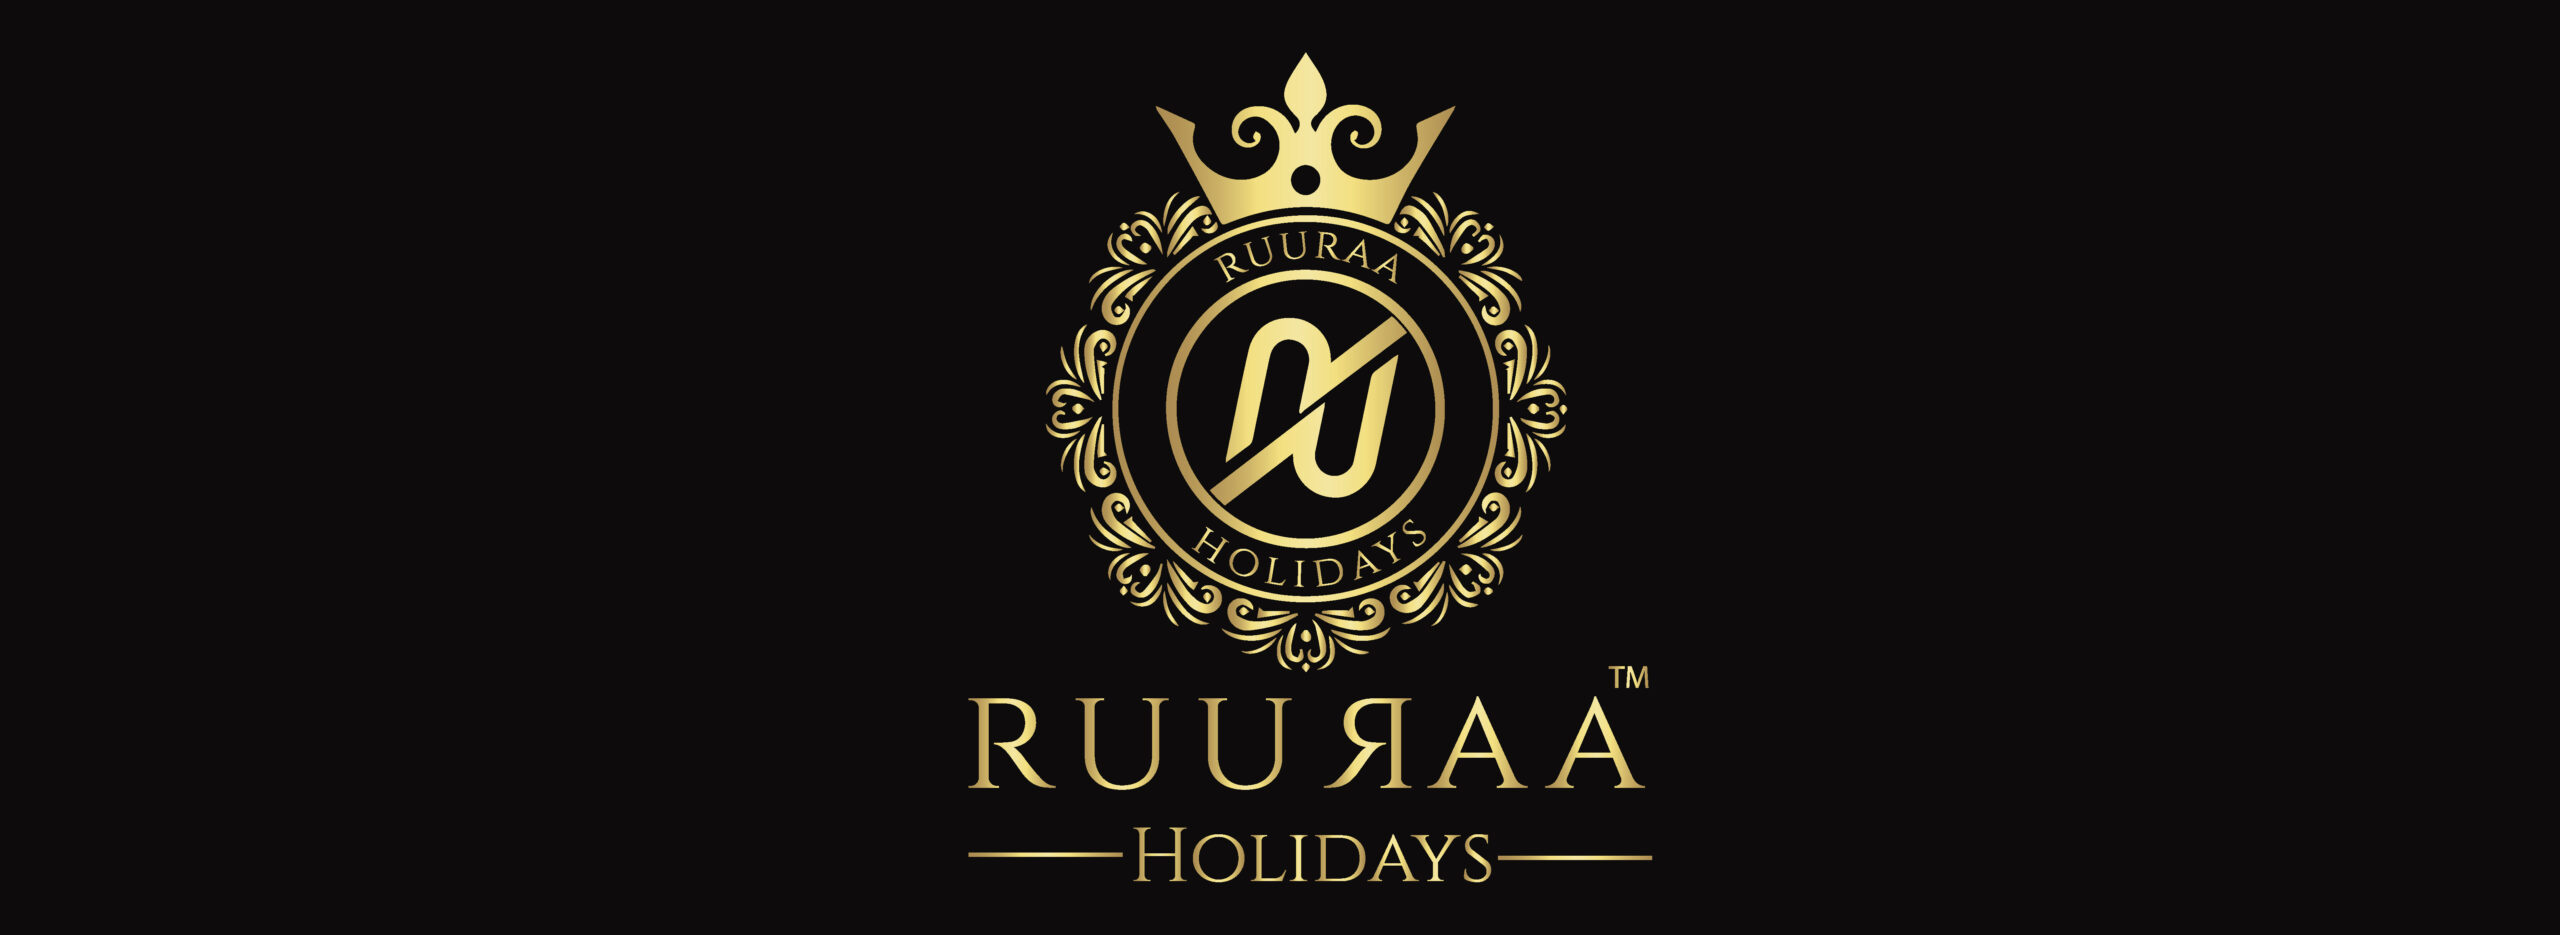 Ruuraa Hotels and Resorts